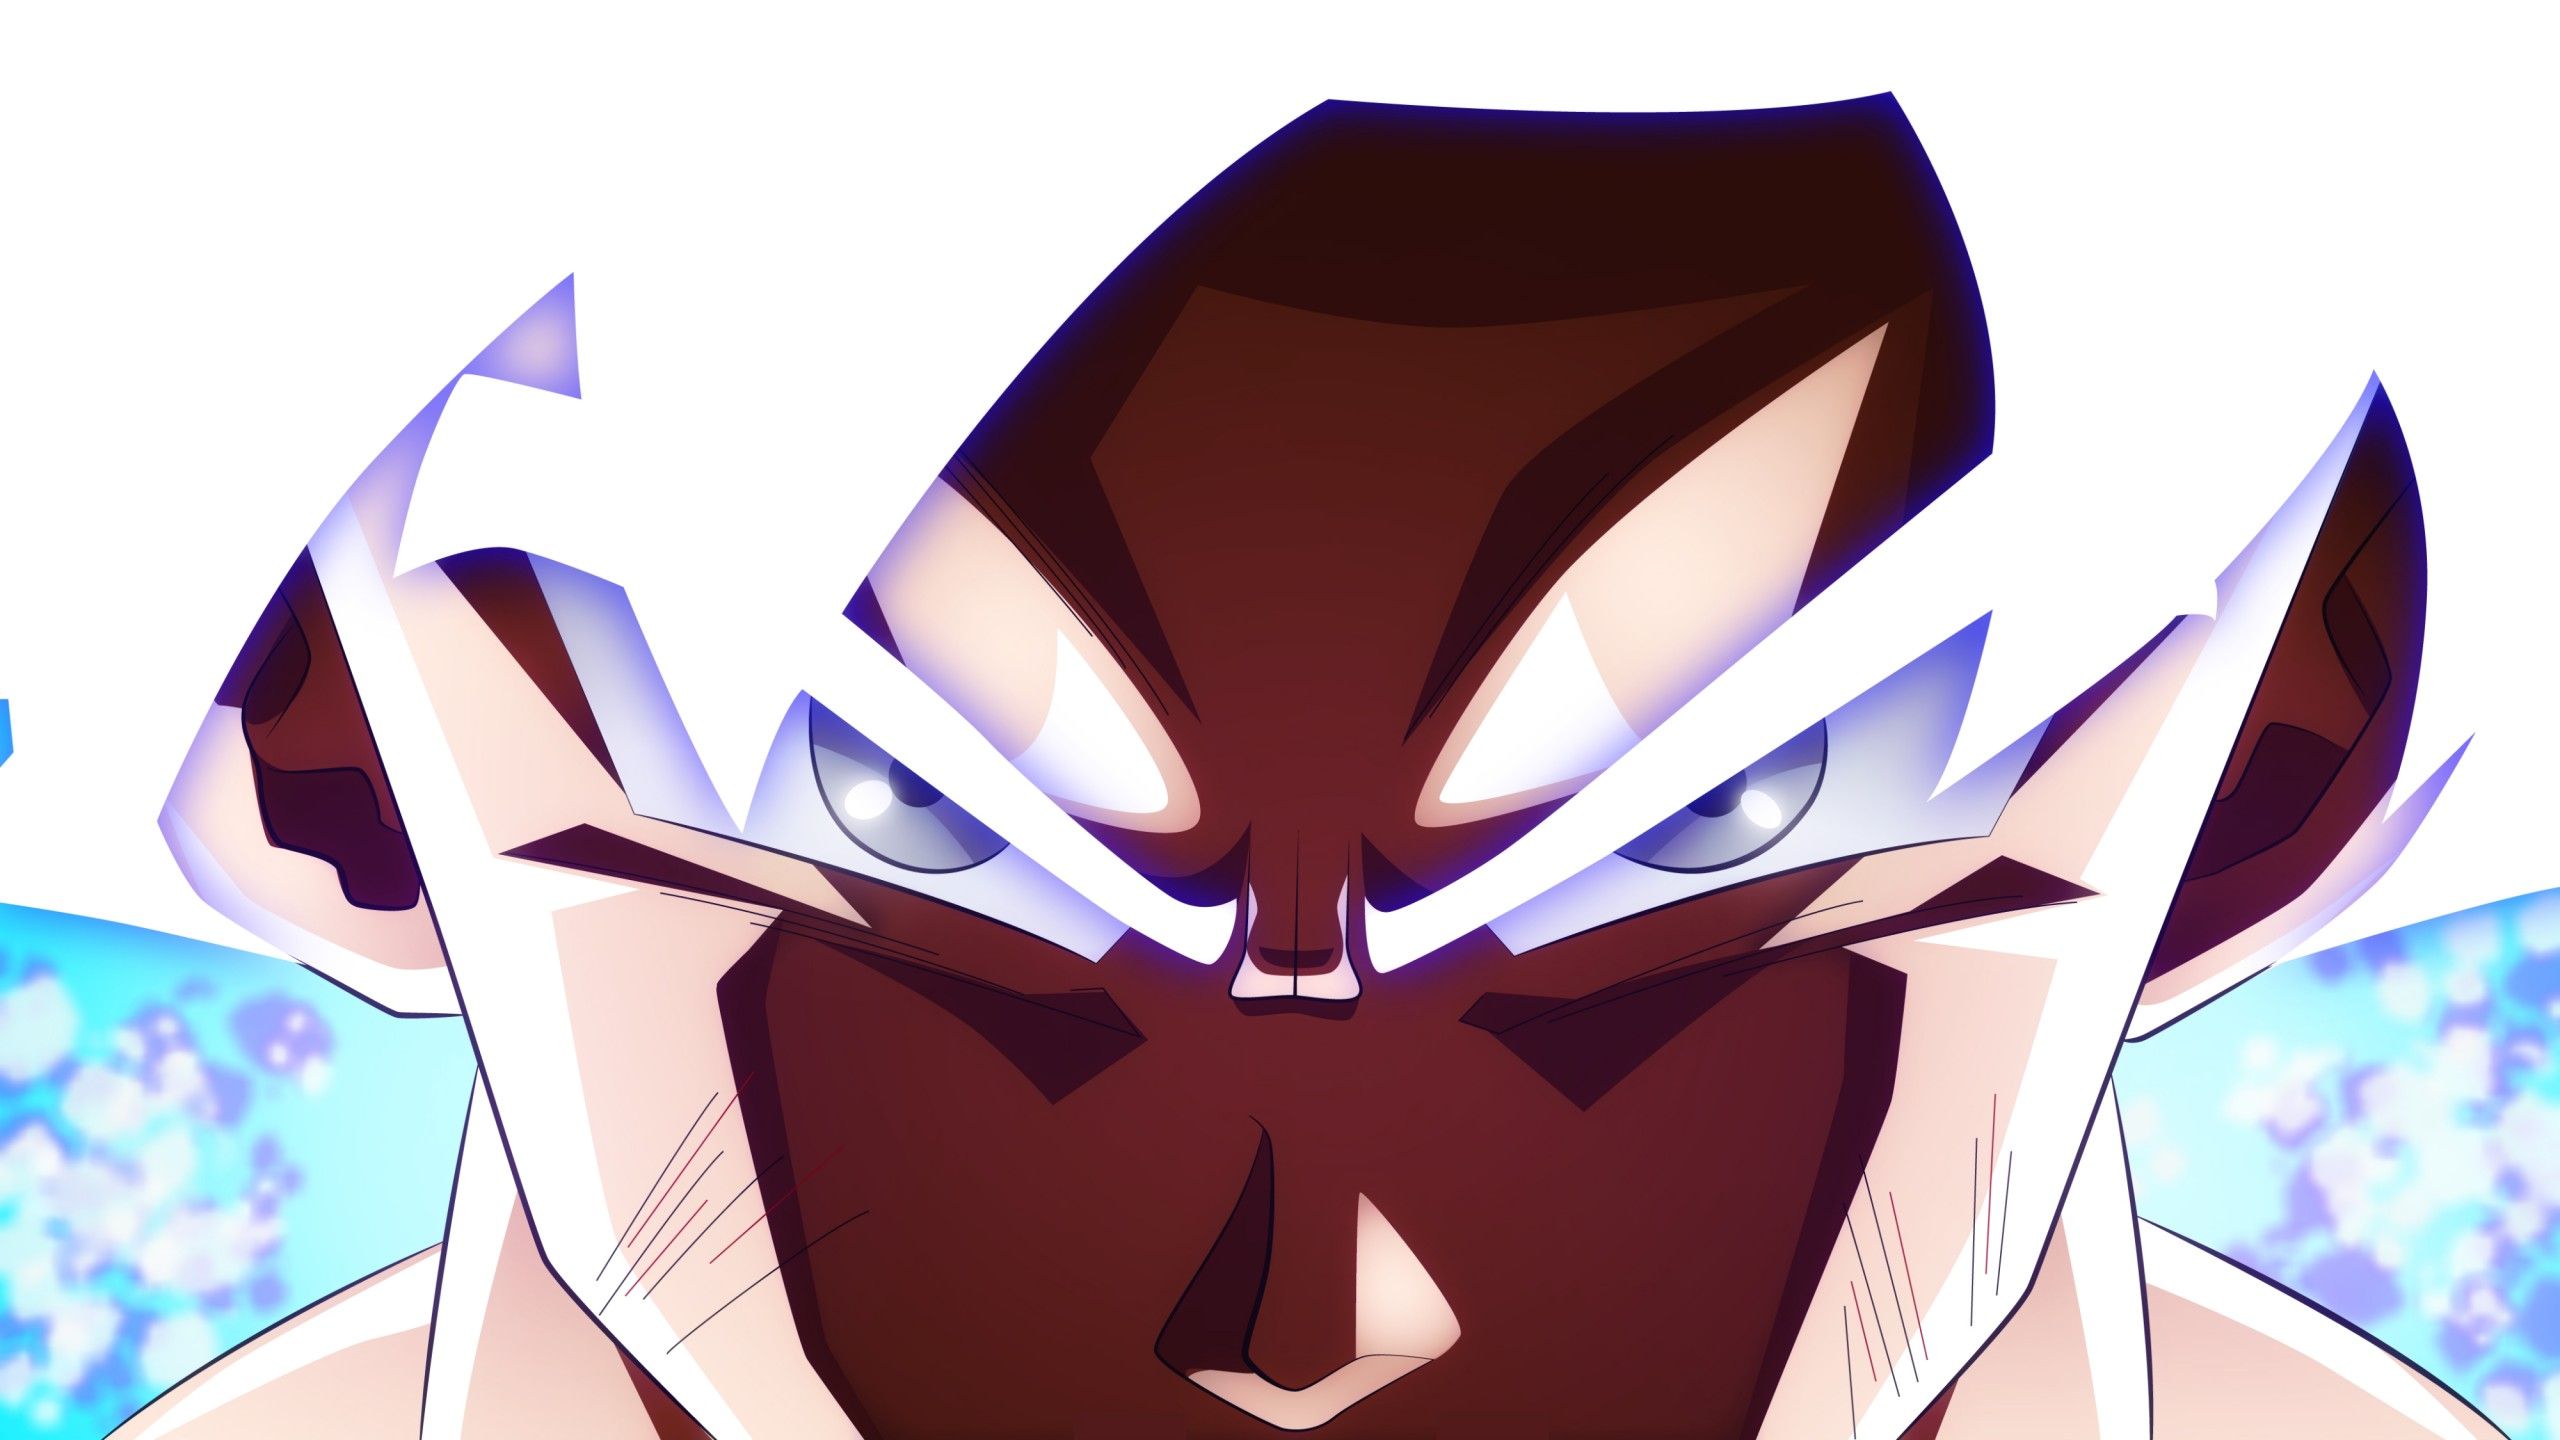 Wallpaper Ultra Instinct Goku, Dragon Ball Super, 4K, Anime,. Wallpaper for iPhone, Android, Mobile and Desktop